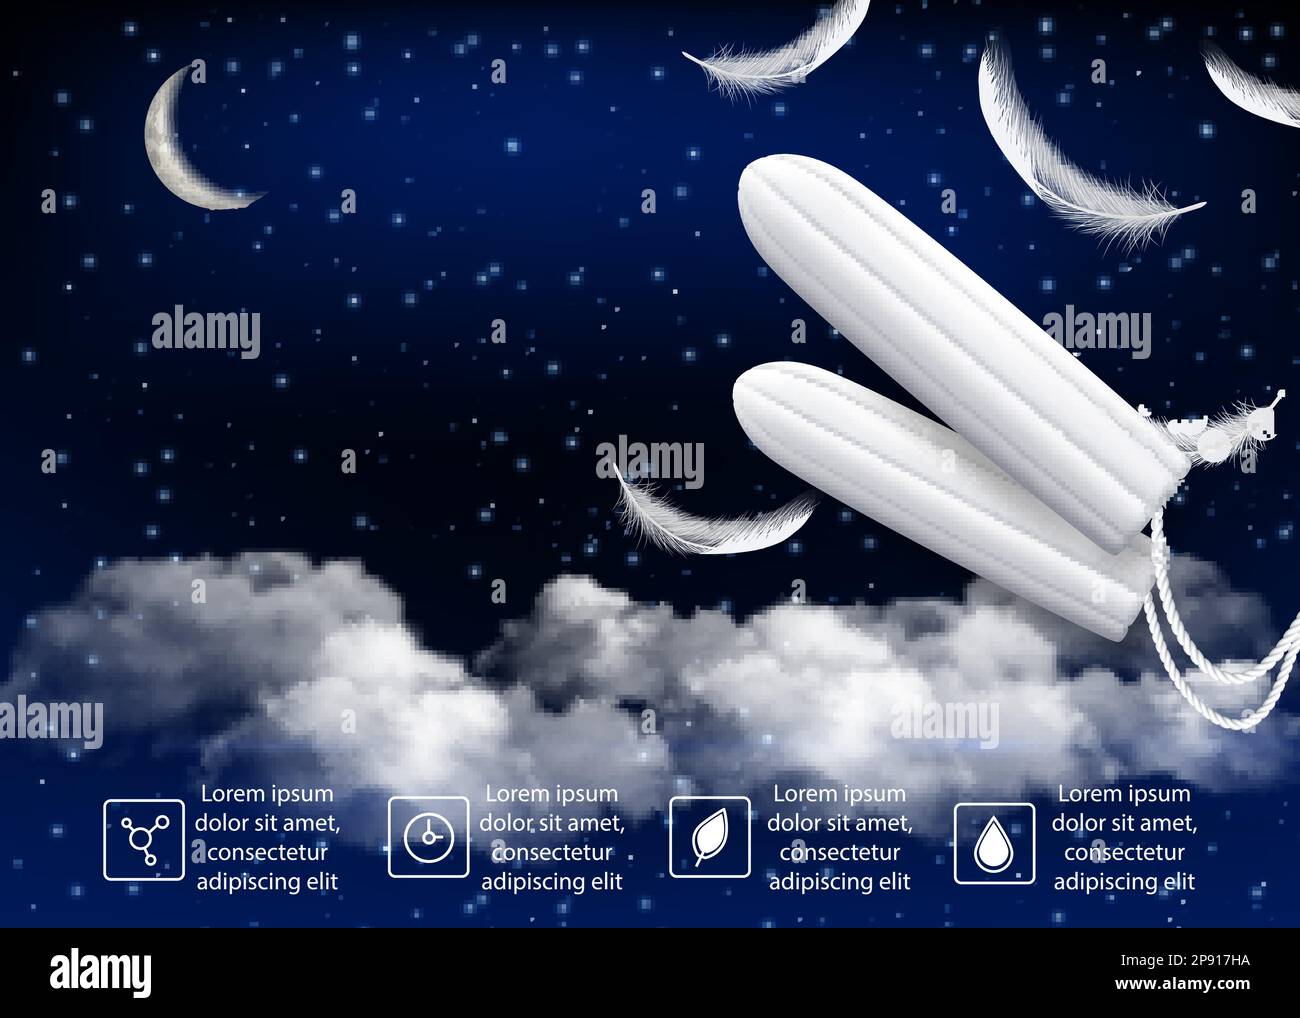 Night feminine hygiene tampons vector advertising poster design template Stock Vector